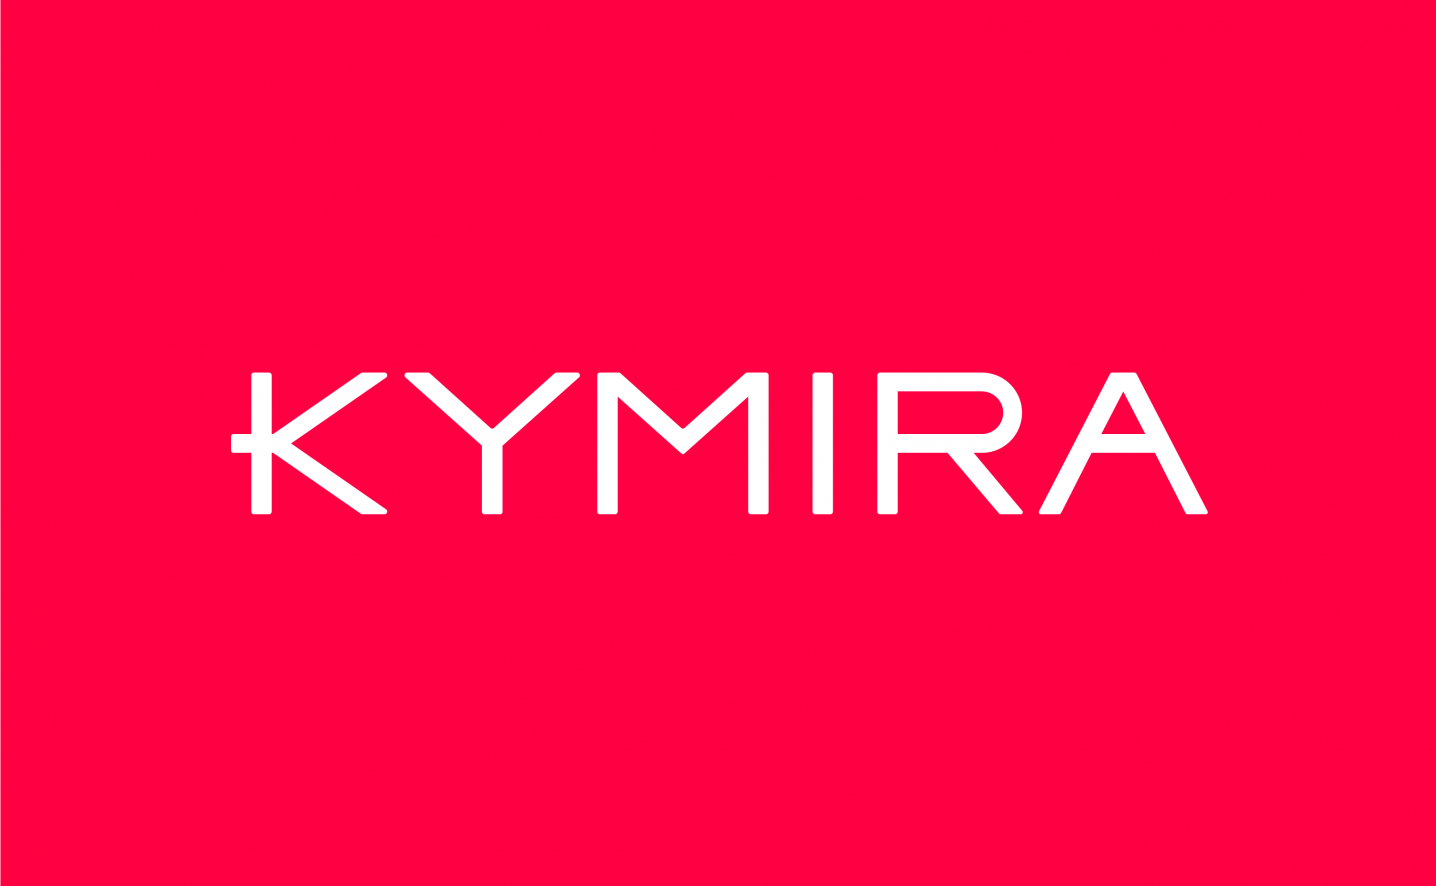 Kymira logo design